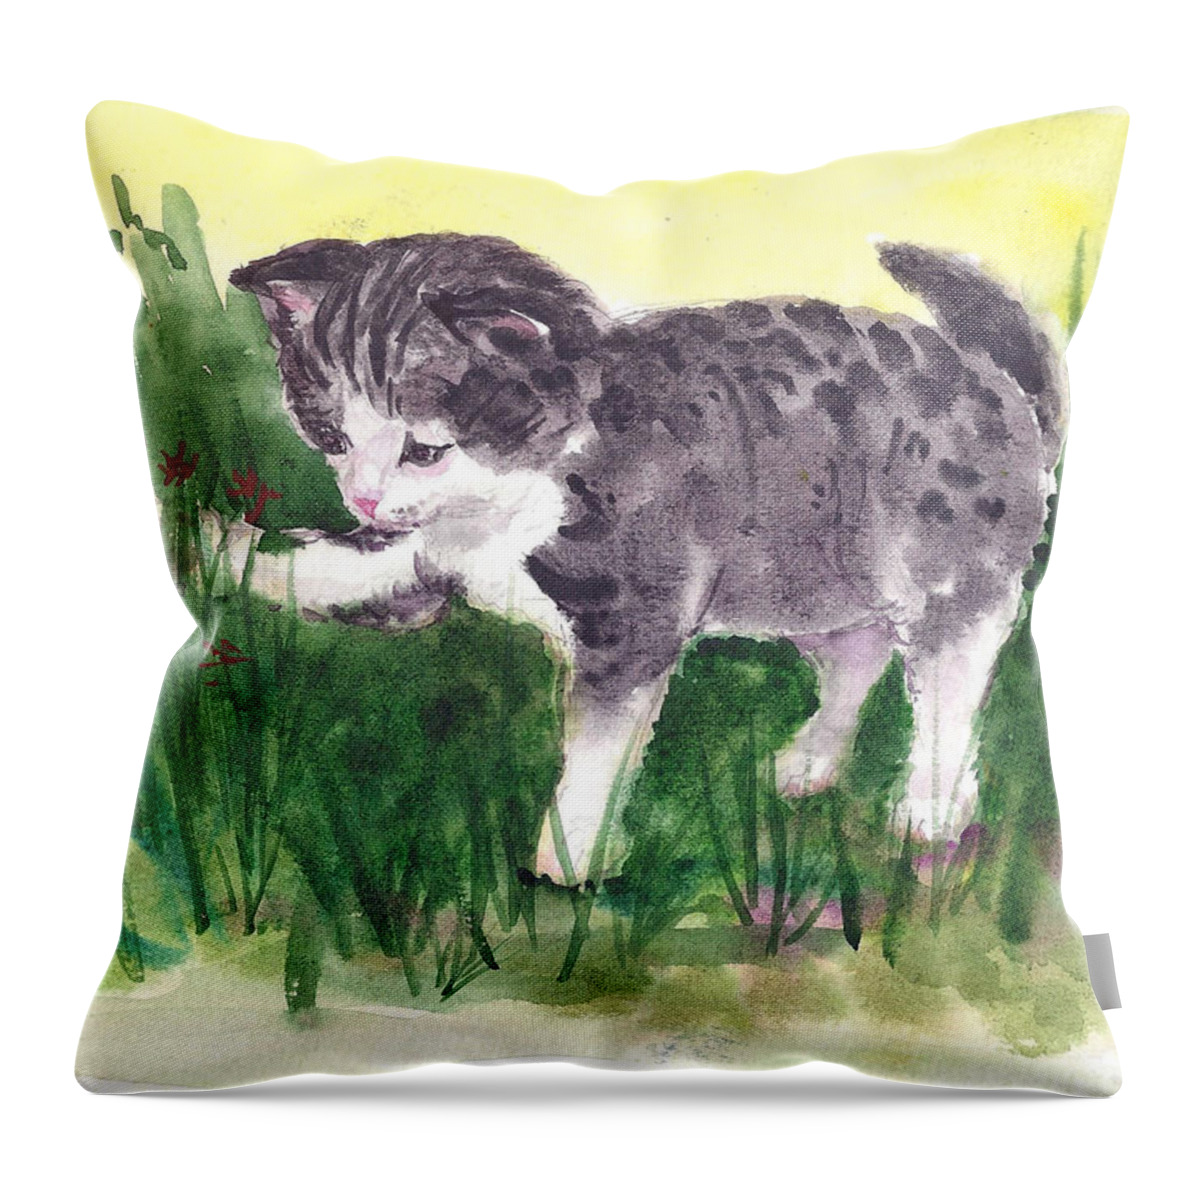 Kitten Throw Pillow featuring the painting Playful Kitten by Asha Sudhaker Shenoy